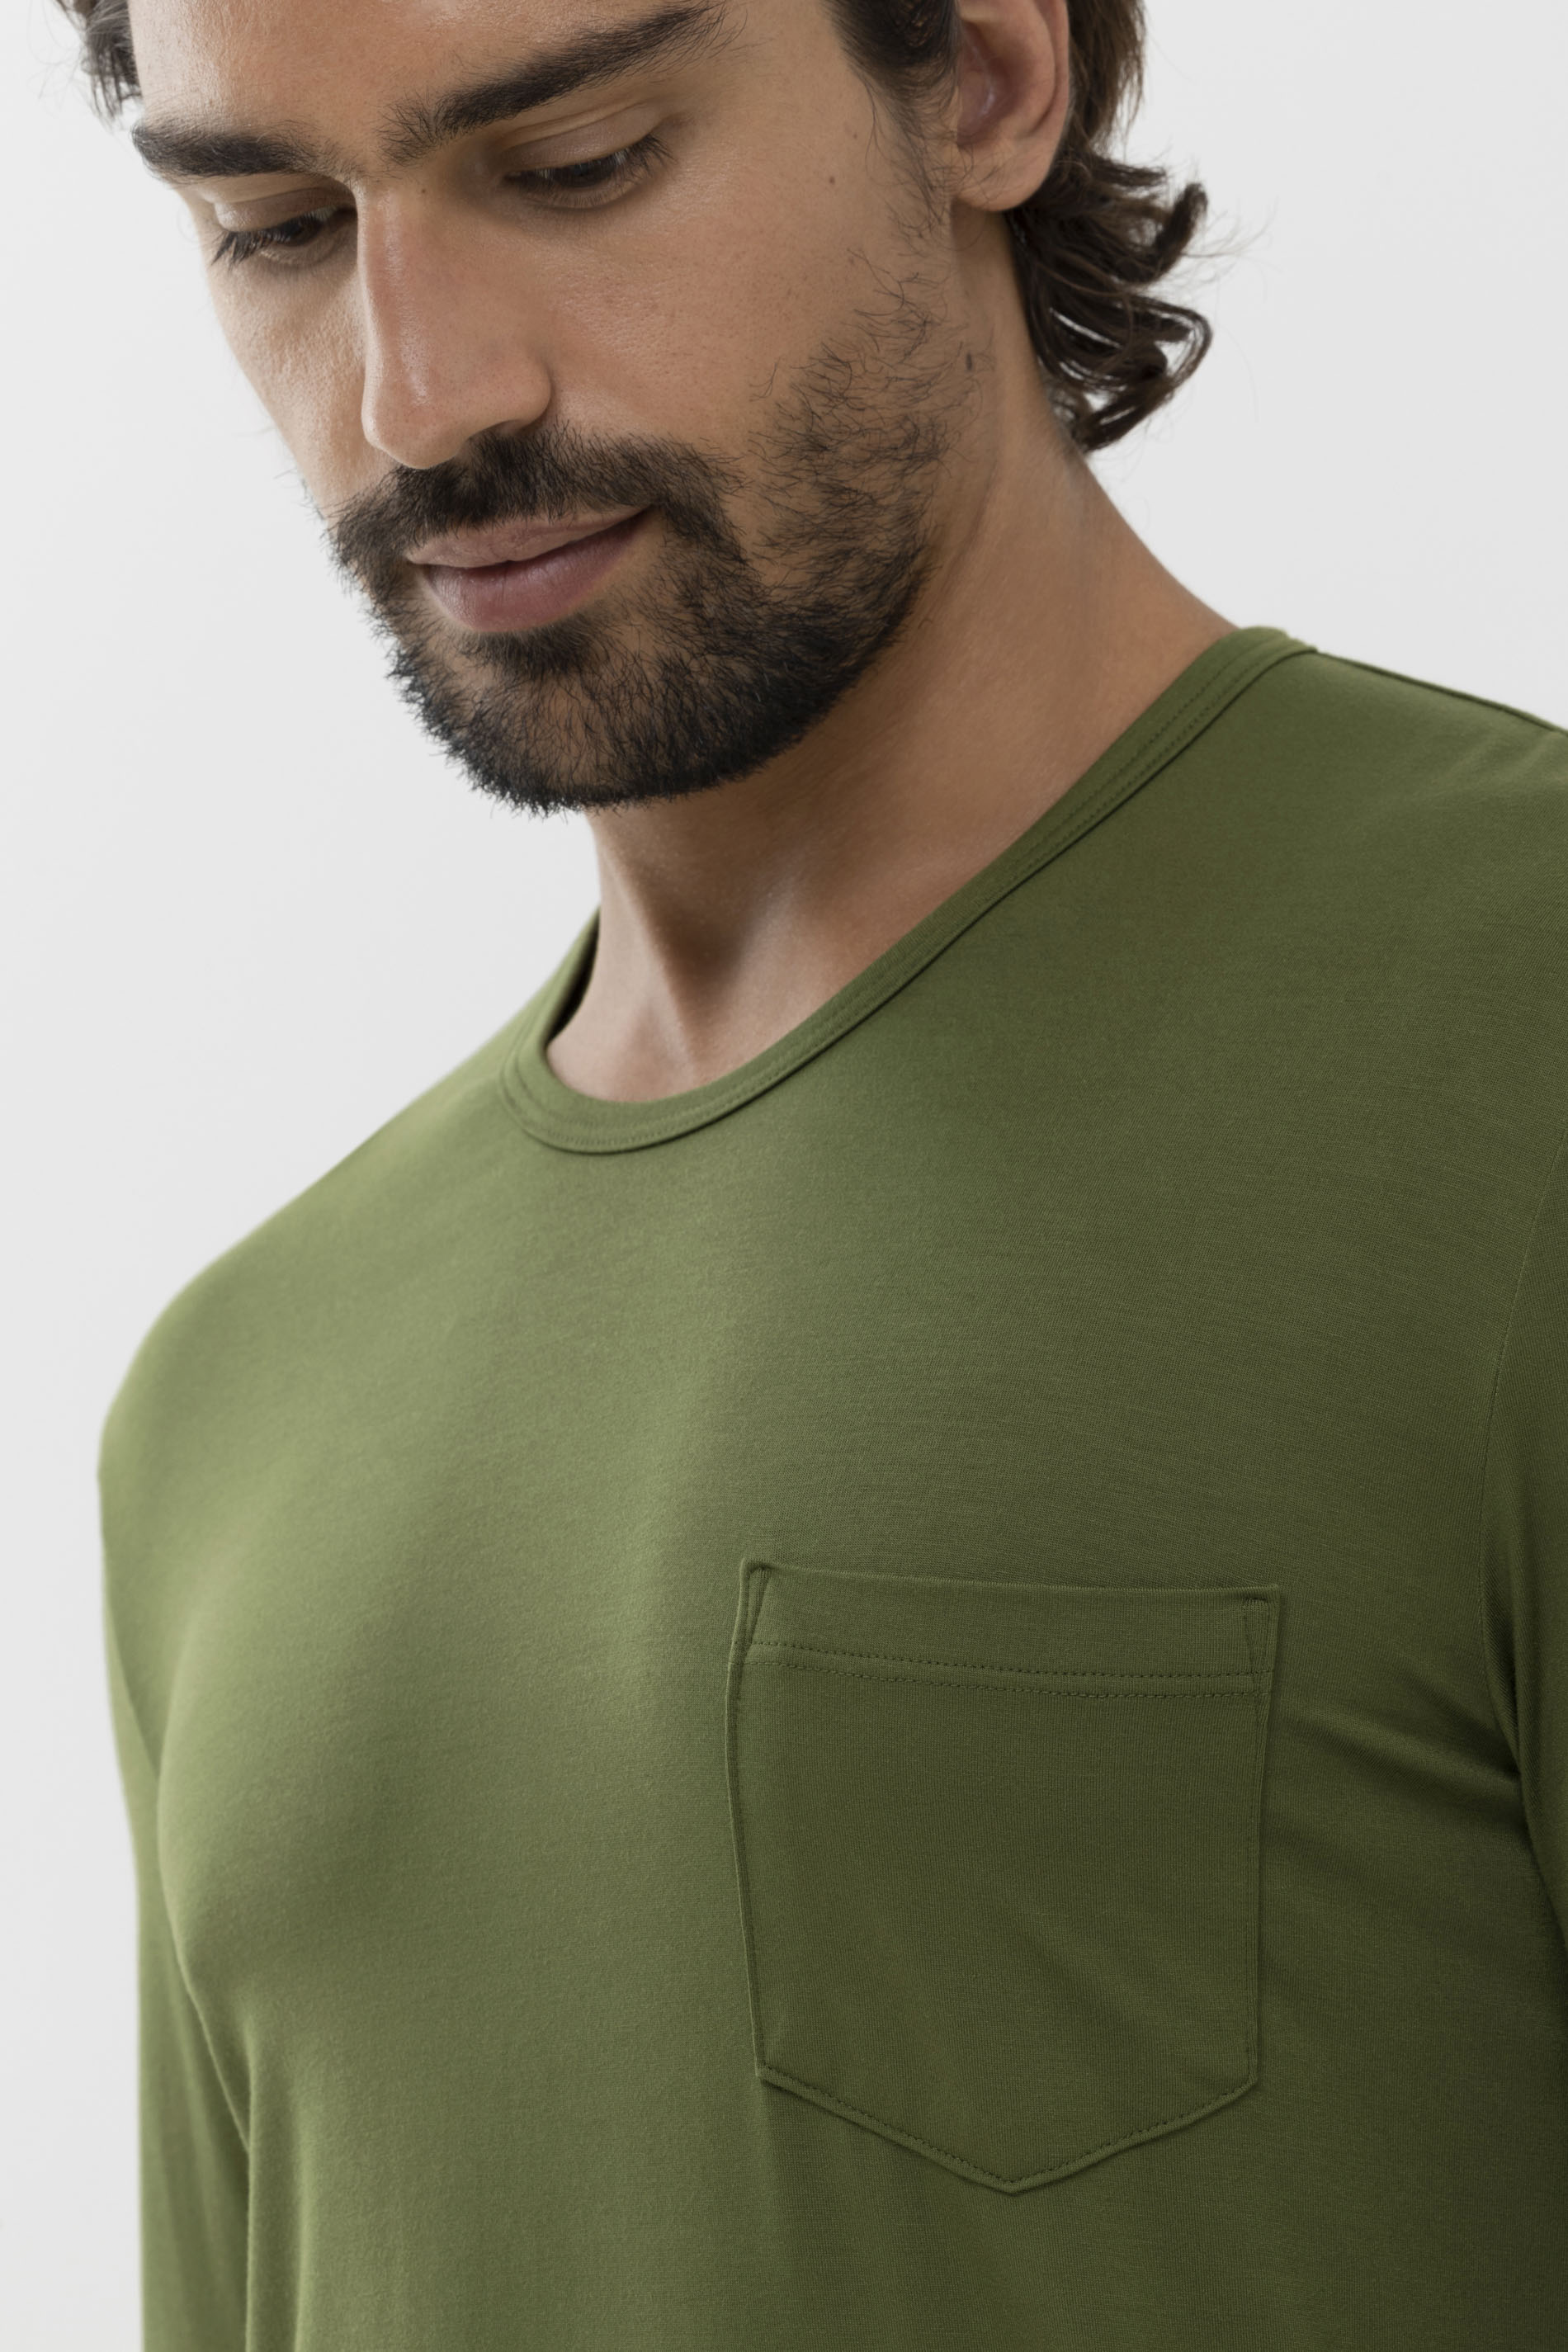 Homewear shirt Serie Jefferson Modal Detail View 01 | mey®